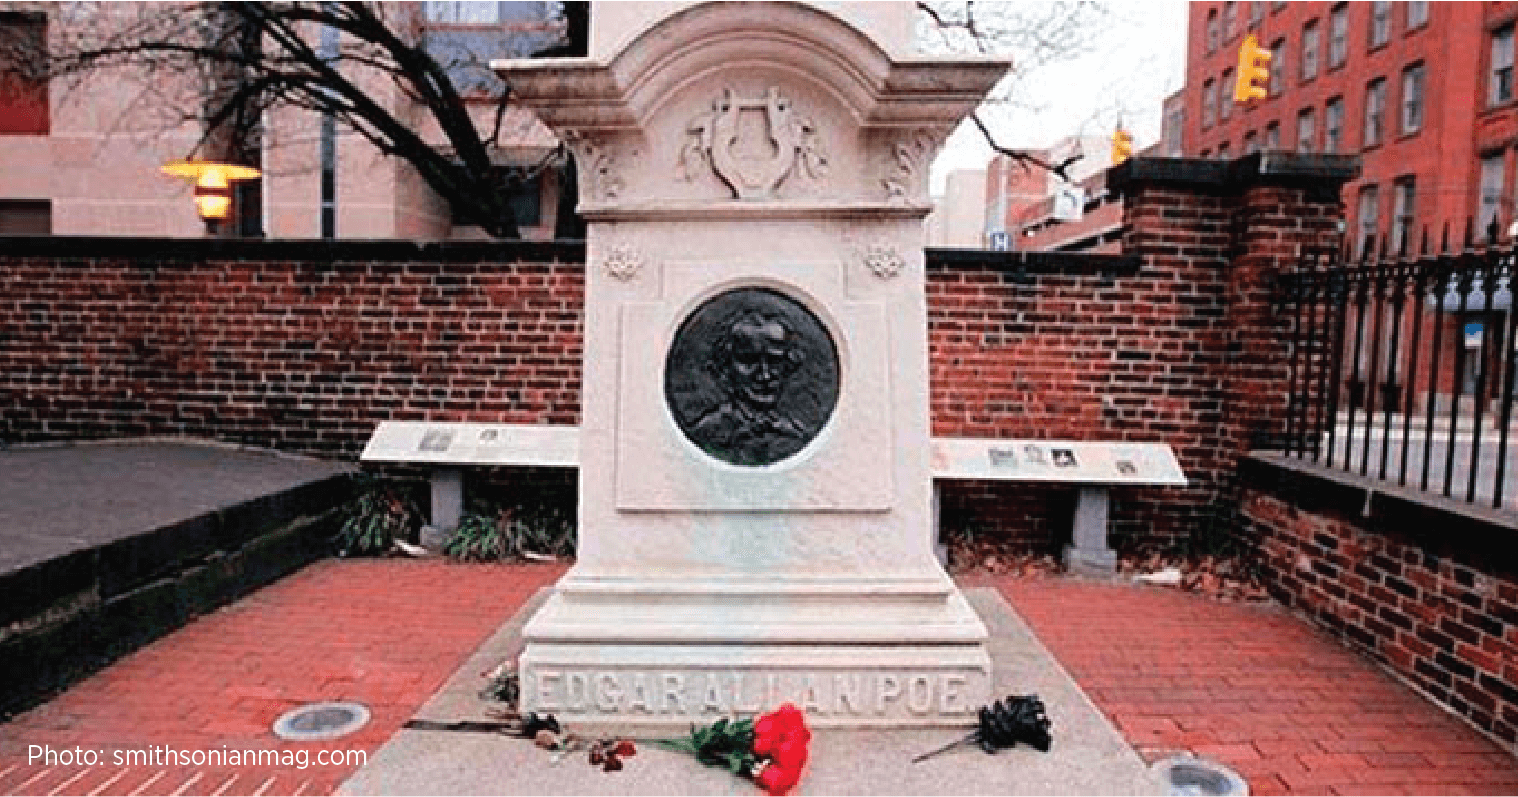 Edgar Allan Poe's Grave